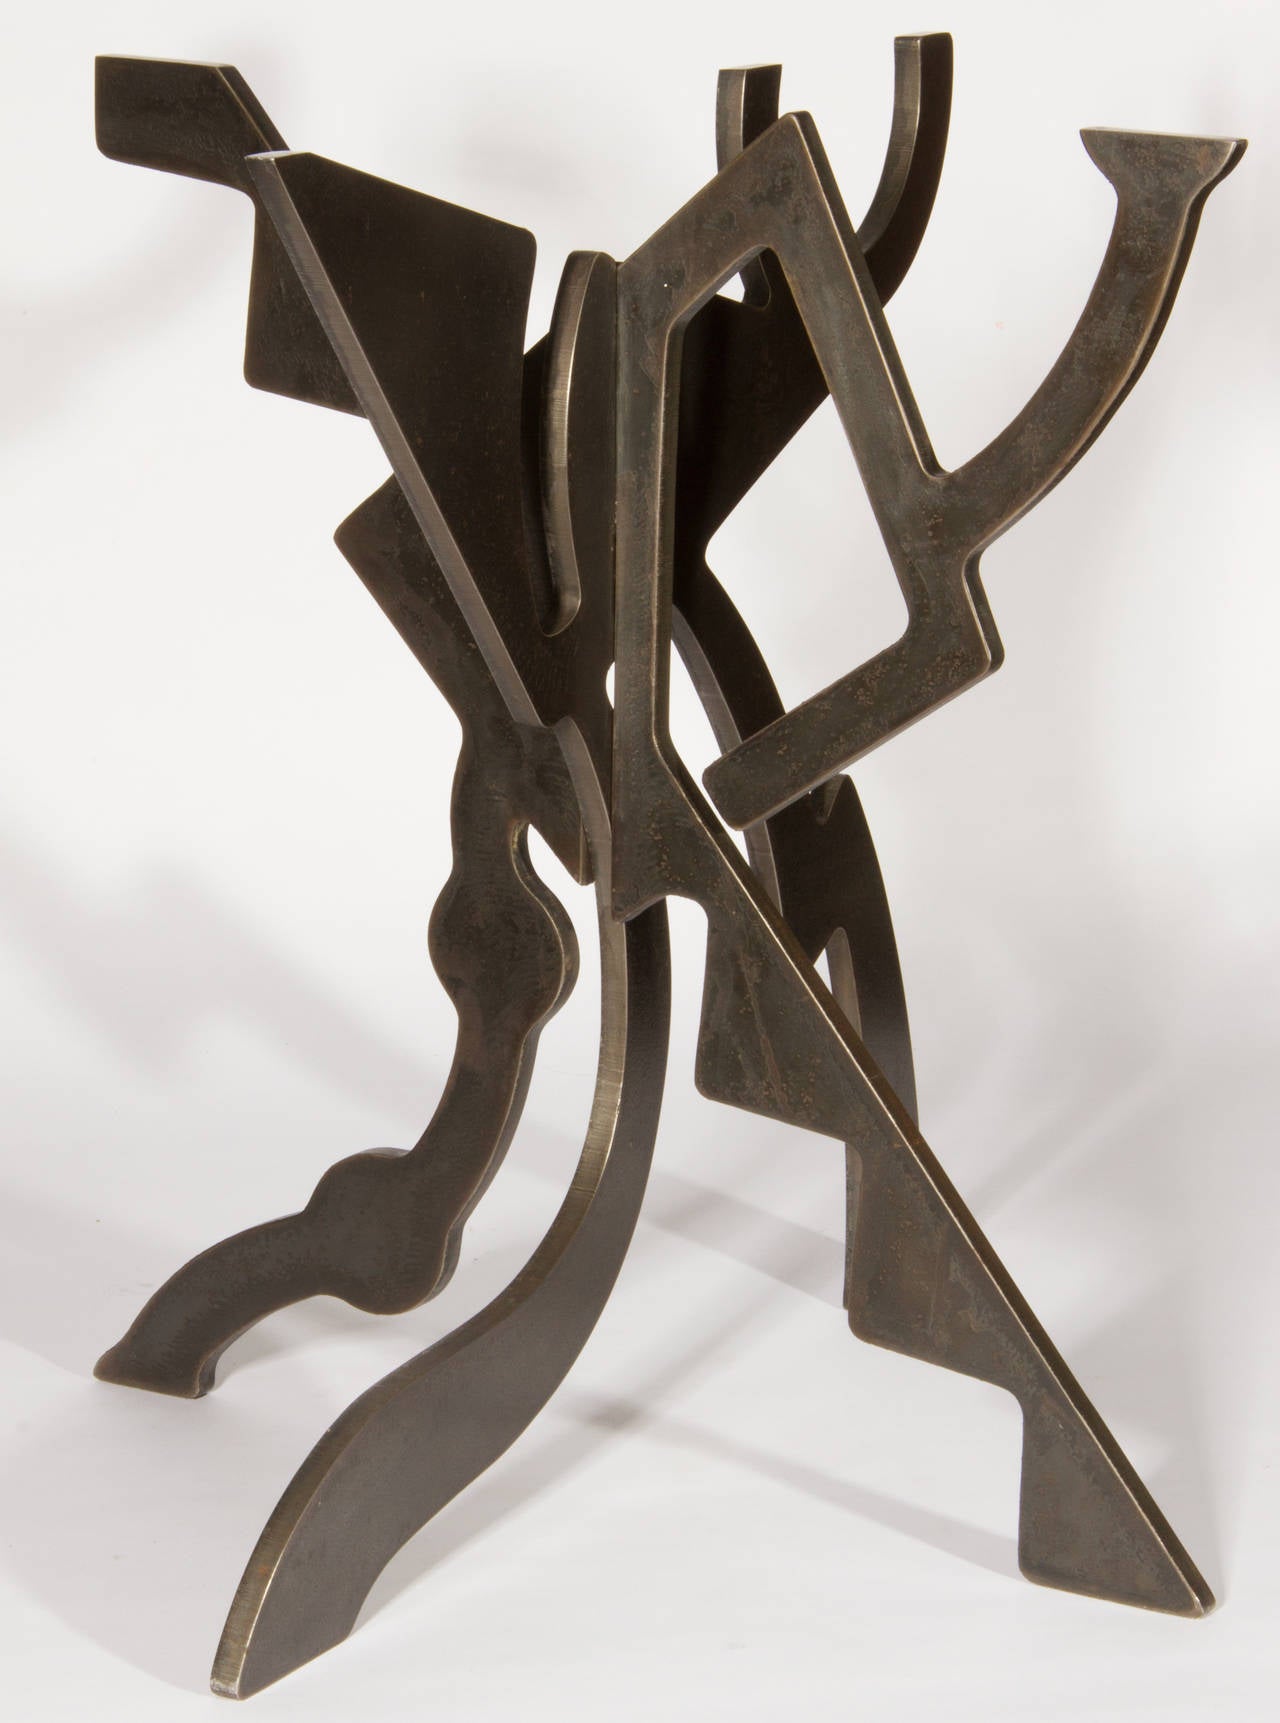 Pucci De Rossi Sculptural Table For Sale 2